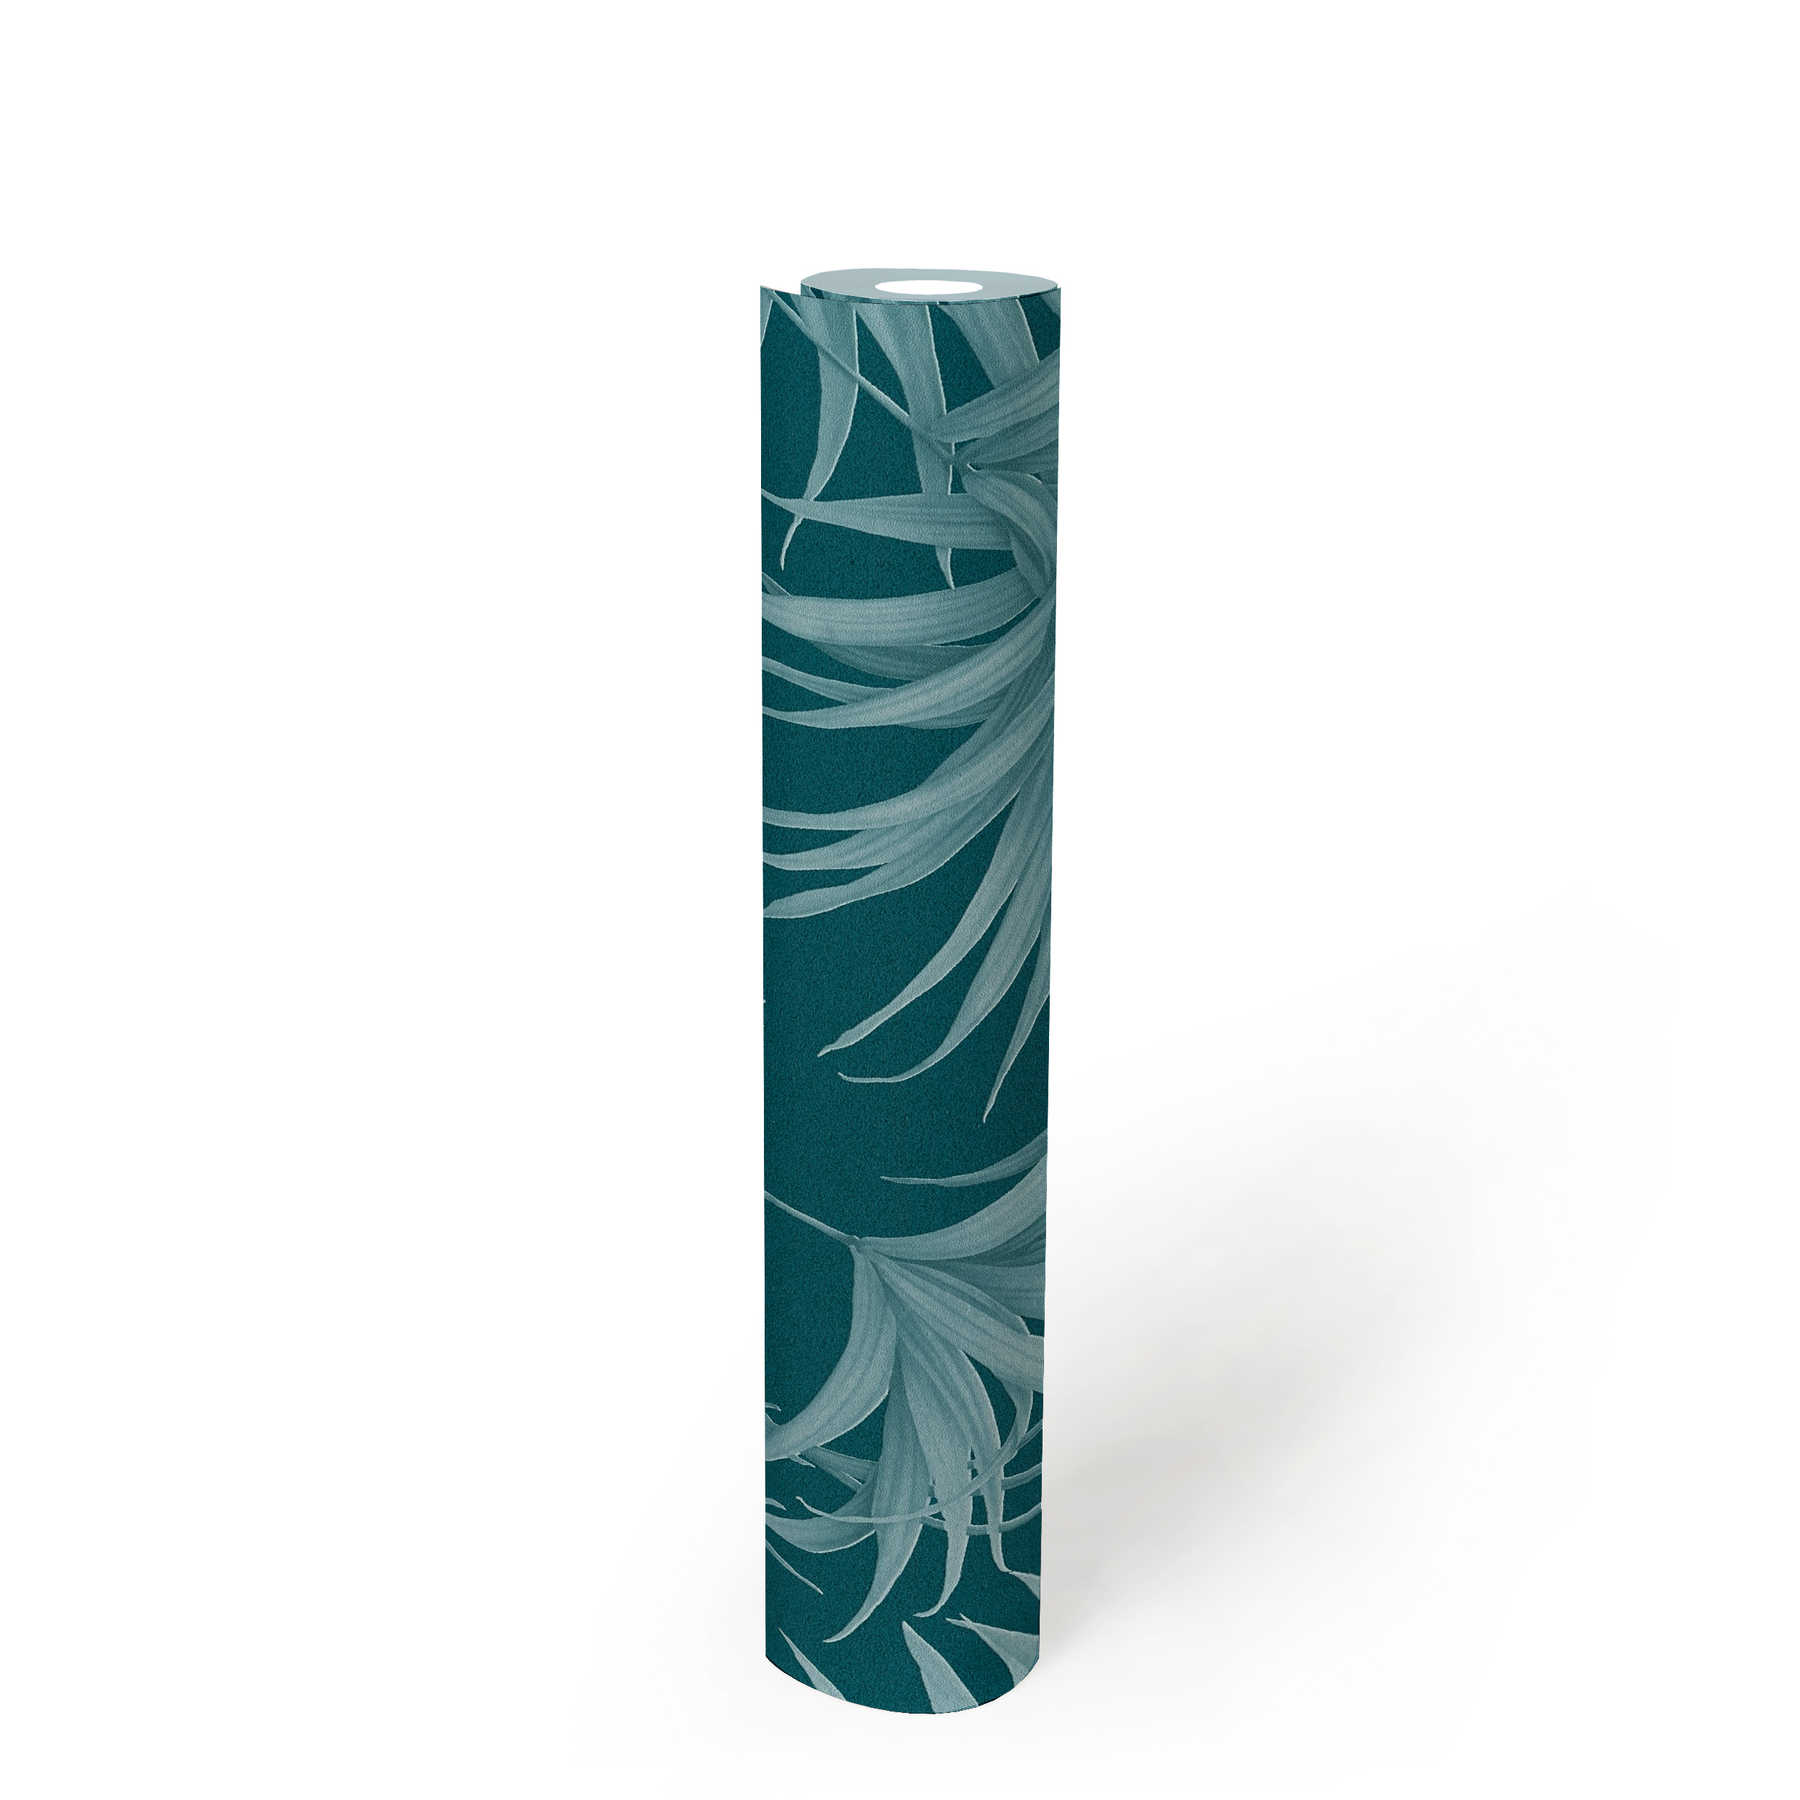             Palmblätter Tapete mit Ton-in-Ton Muster in Petrol – Blau
        